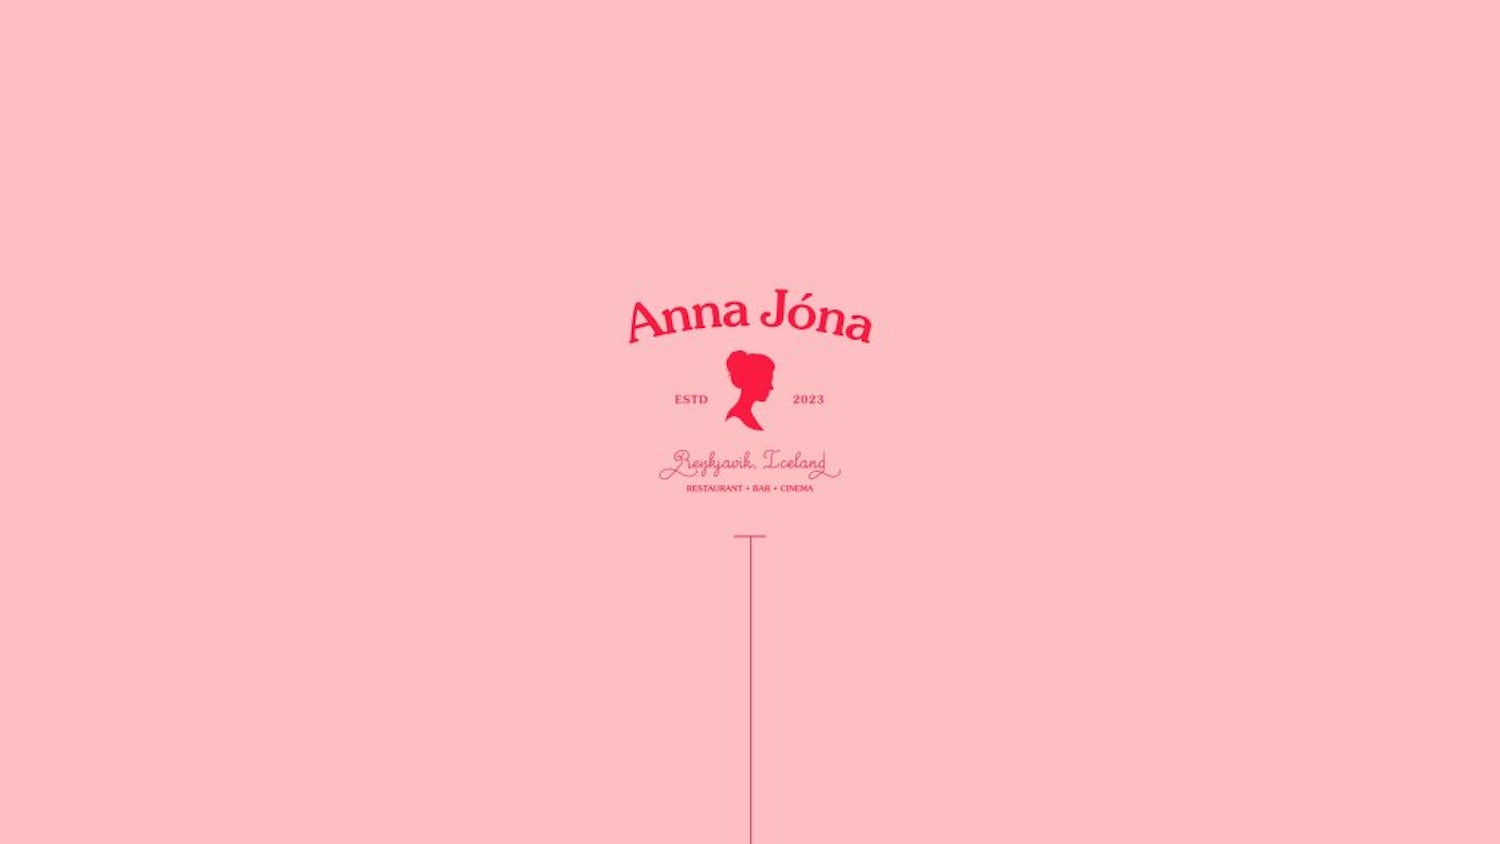 The Anna Jóna homepage